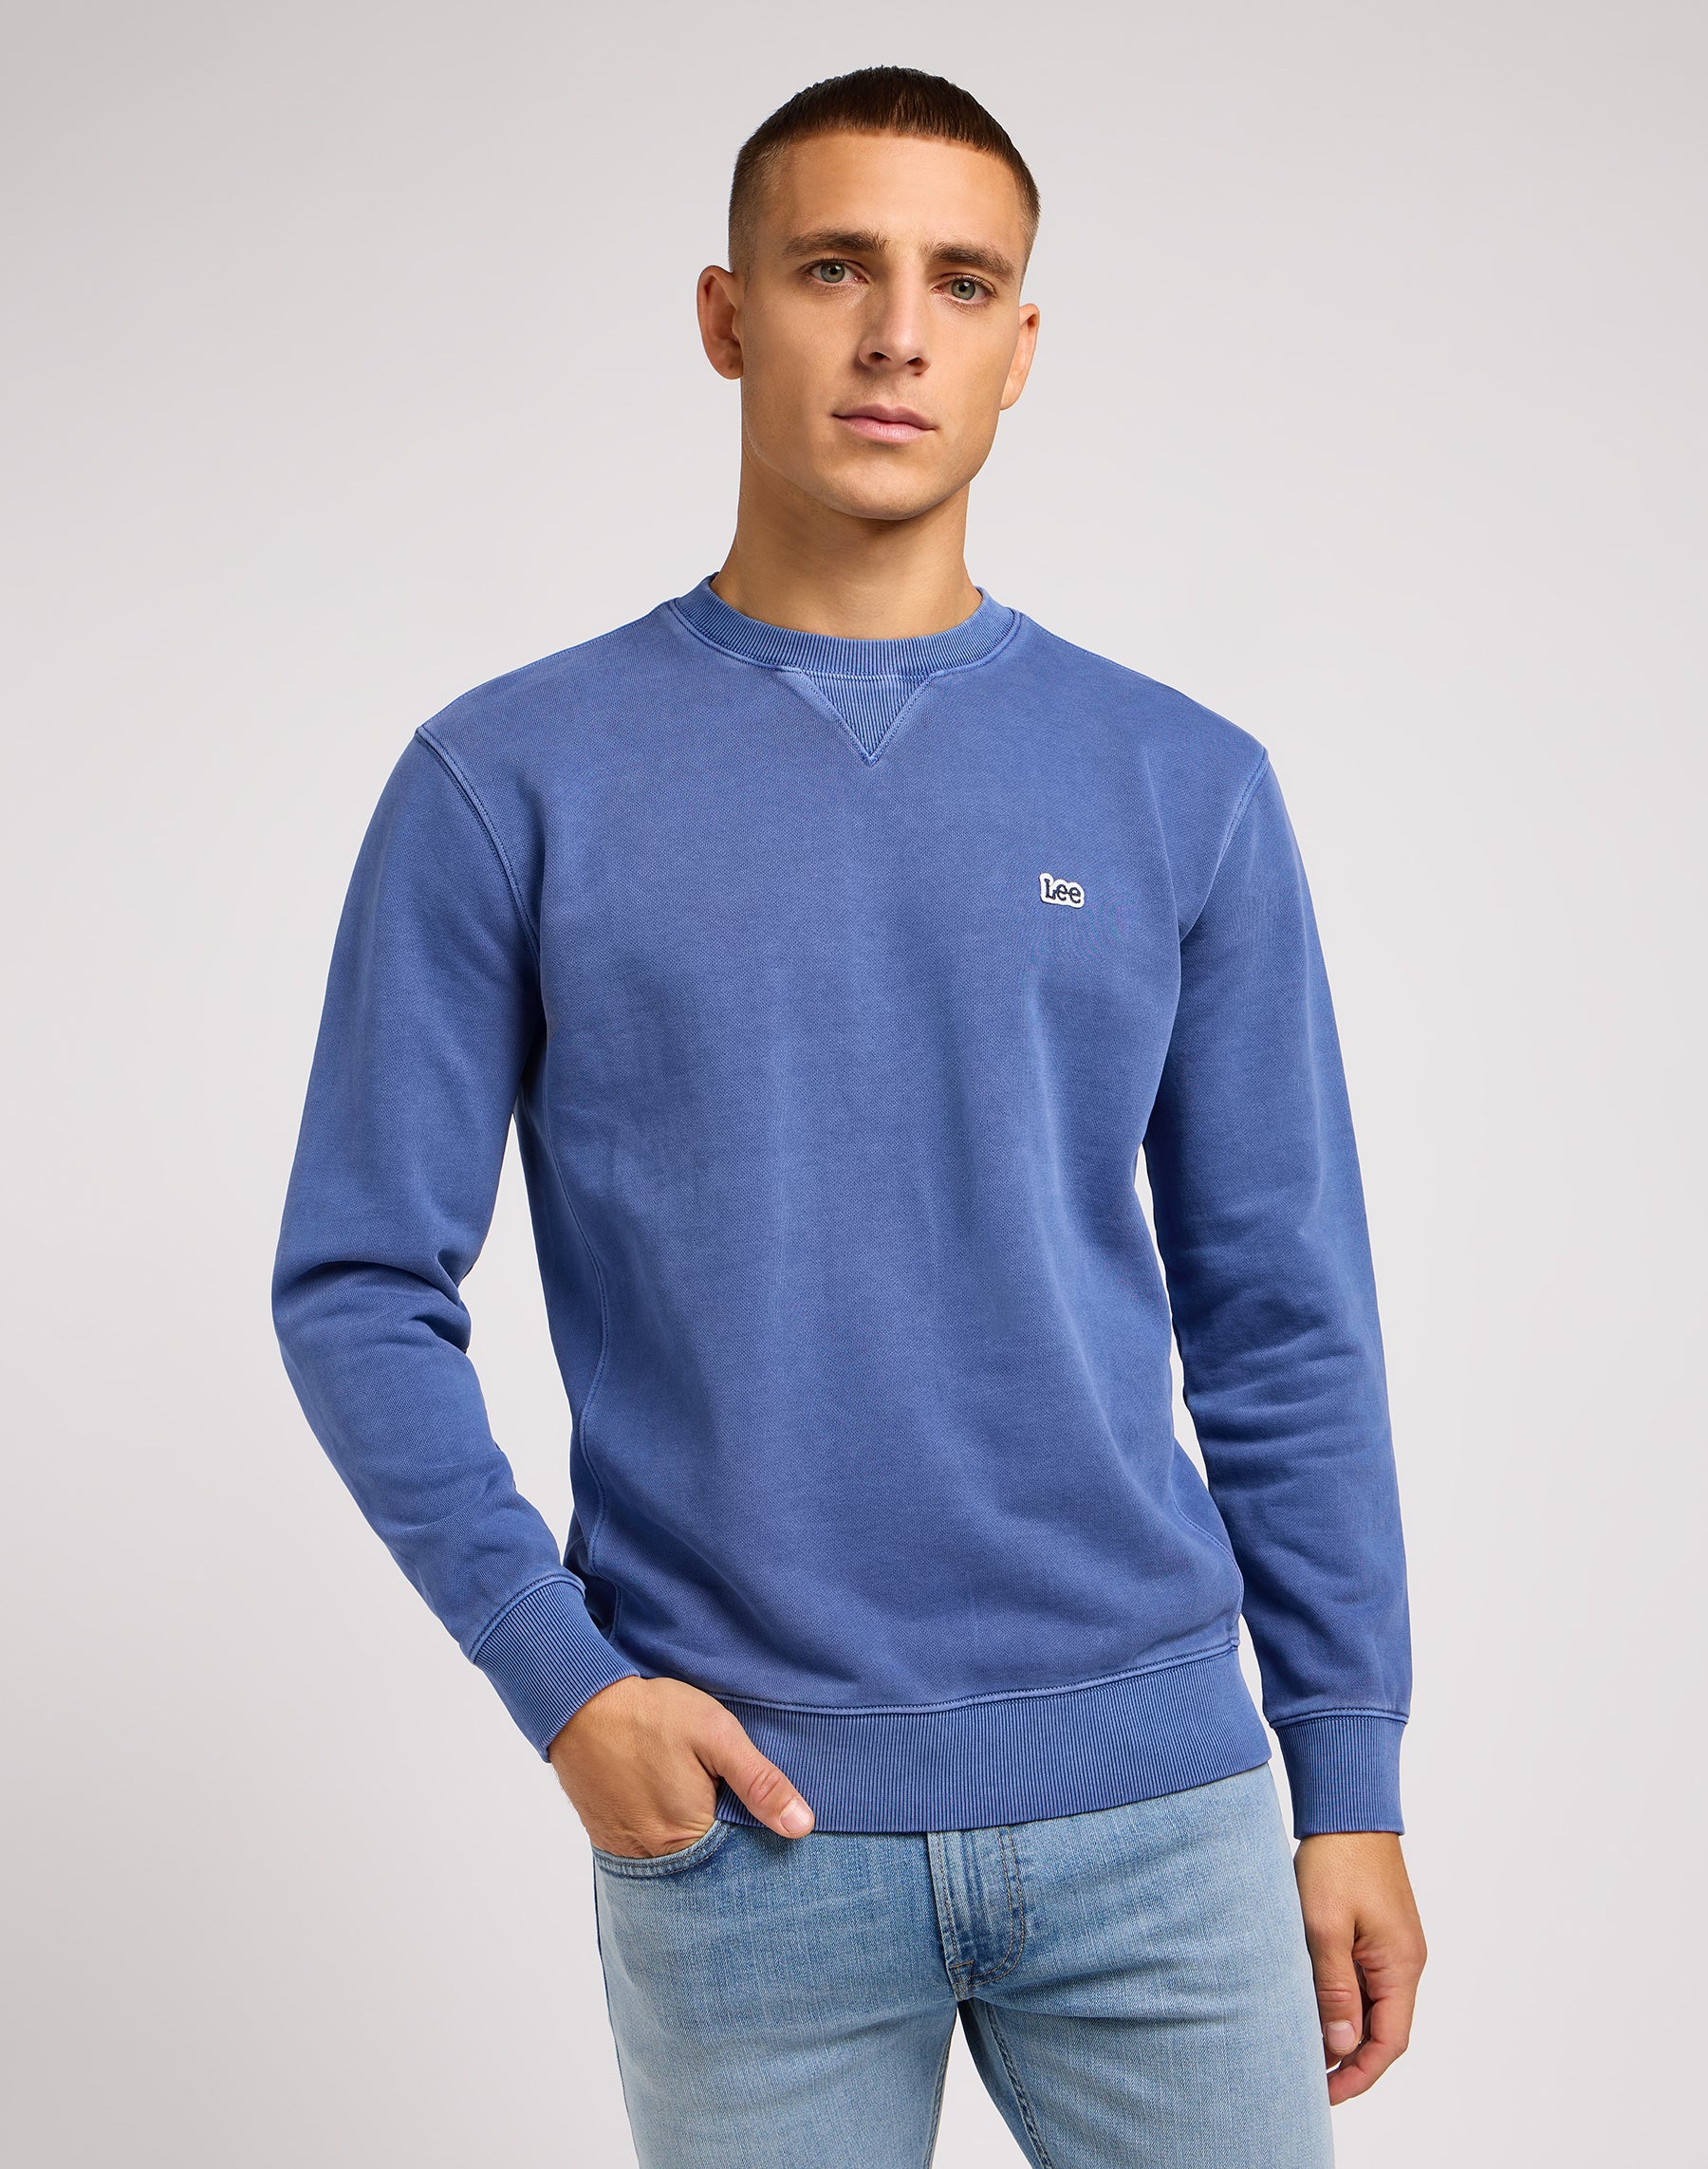 Plain Crew Sweater in Surf Blue Sweatshirts Lee   